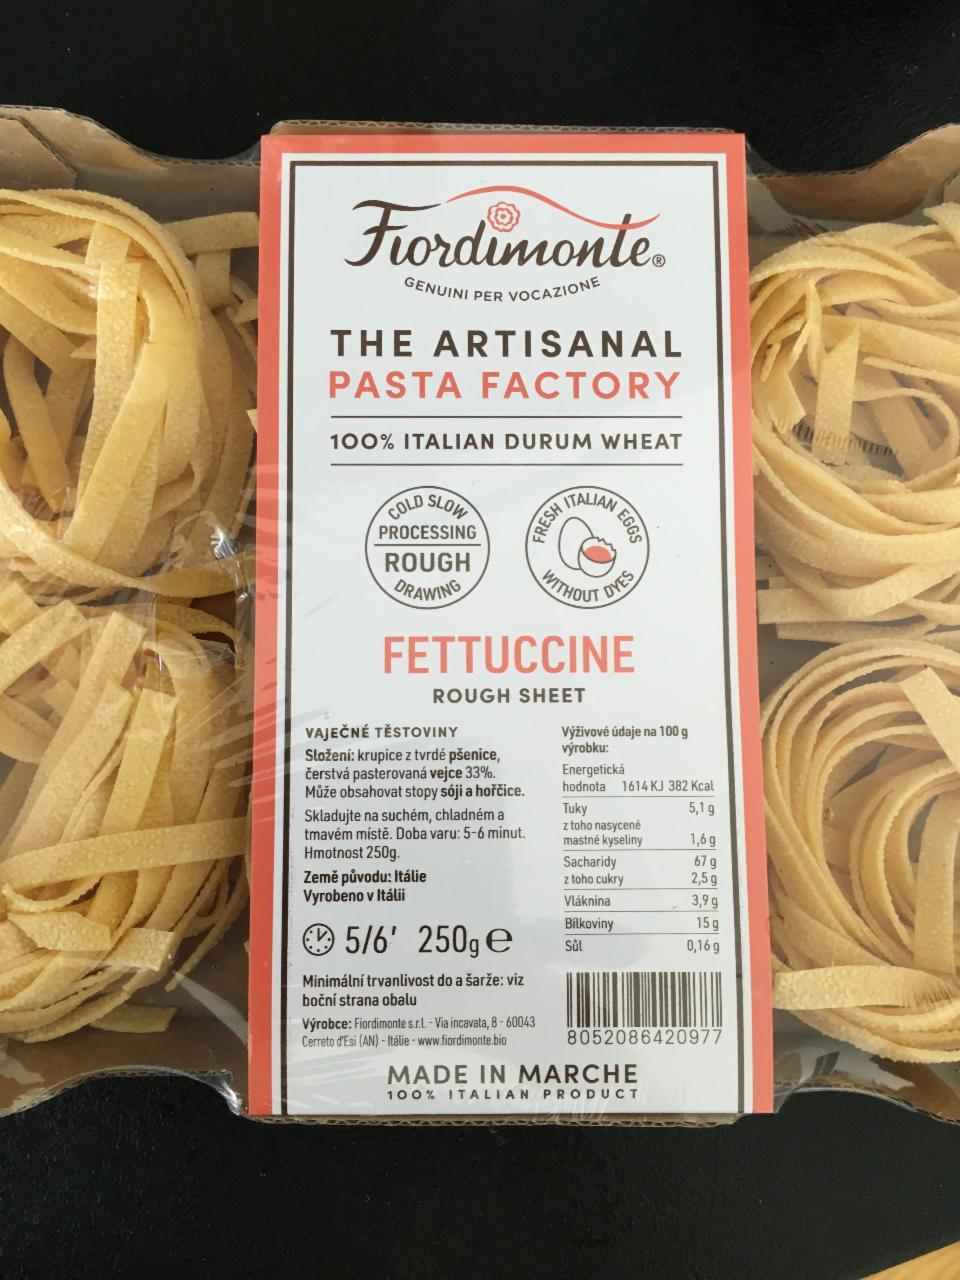 Fotografie - Fettuccine rough sheet Fiordimonte